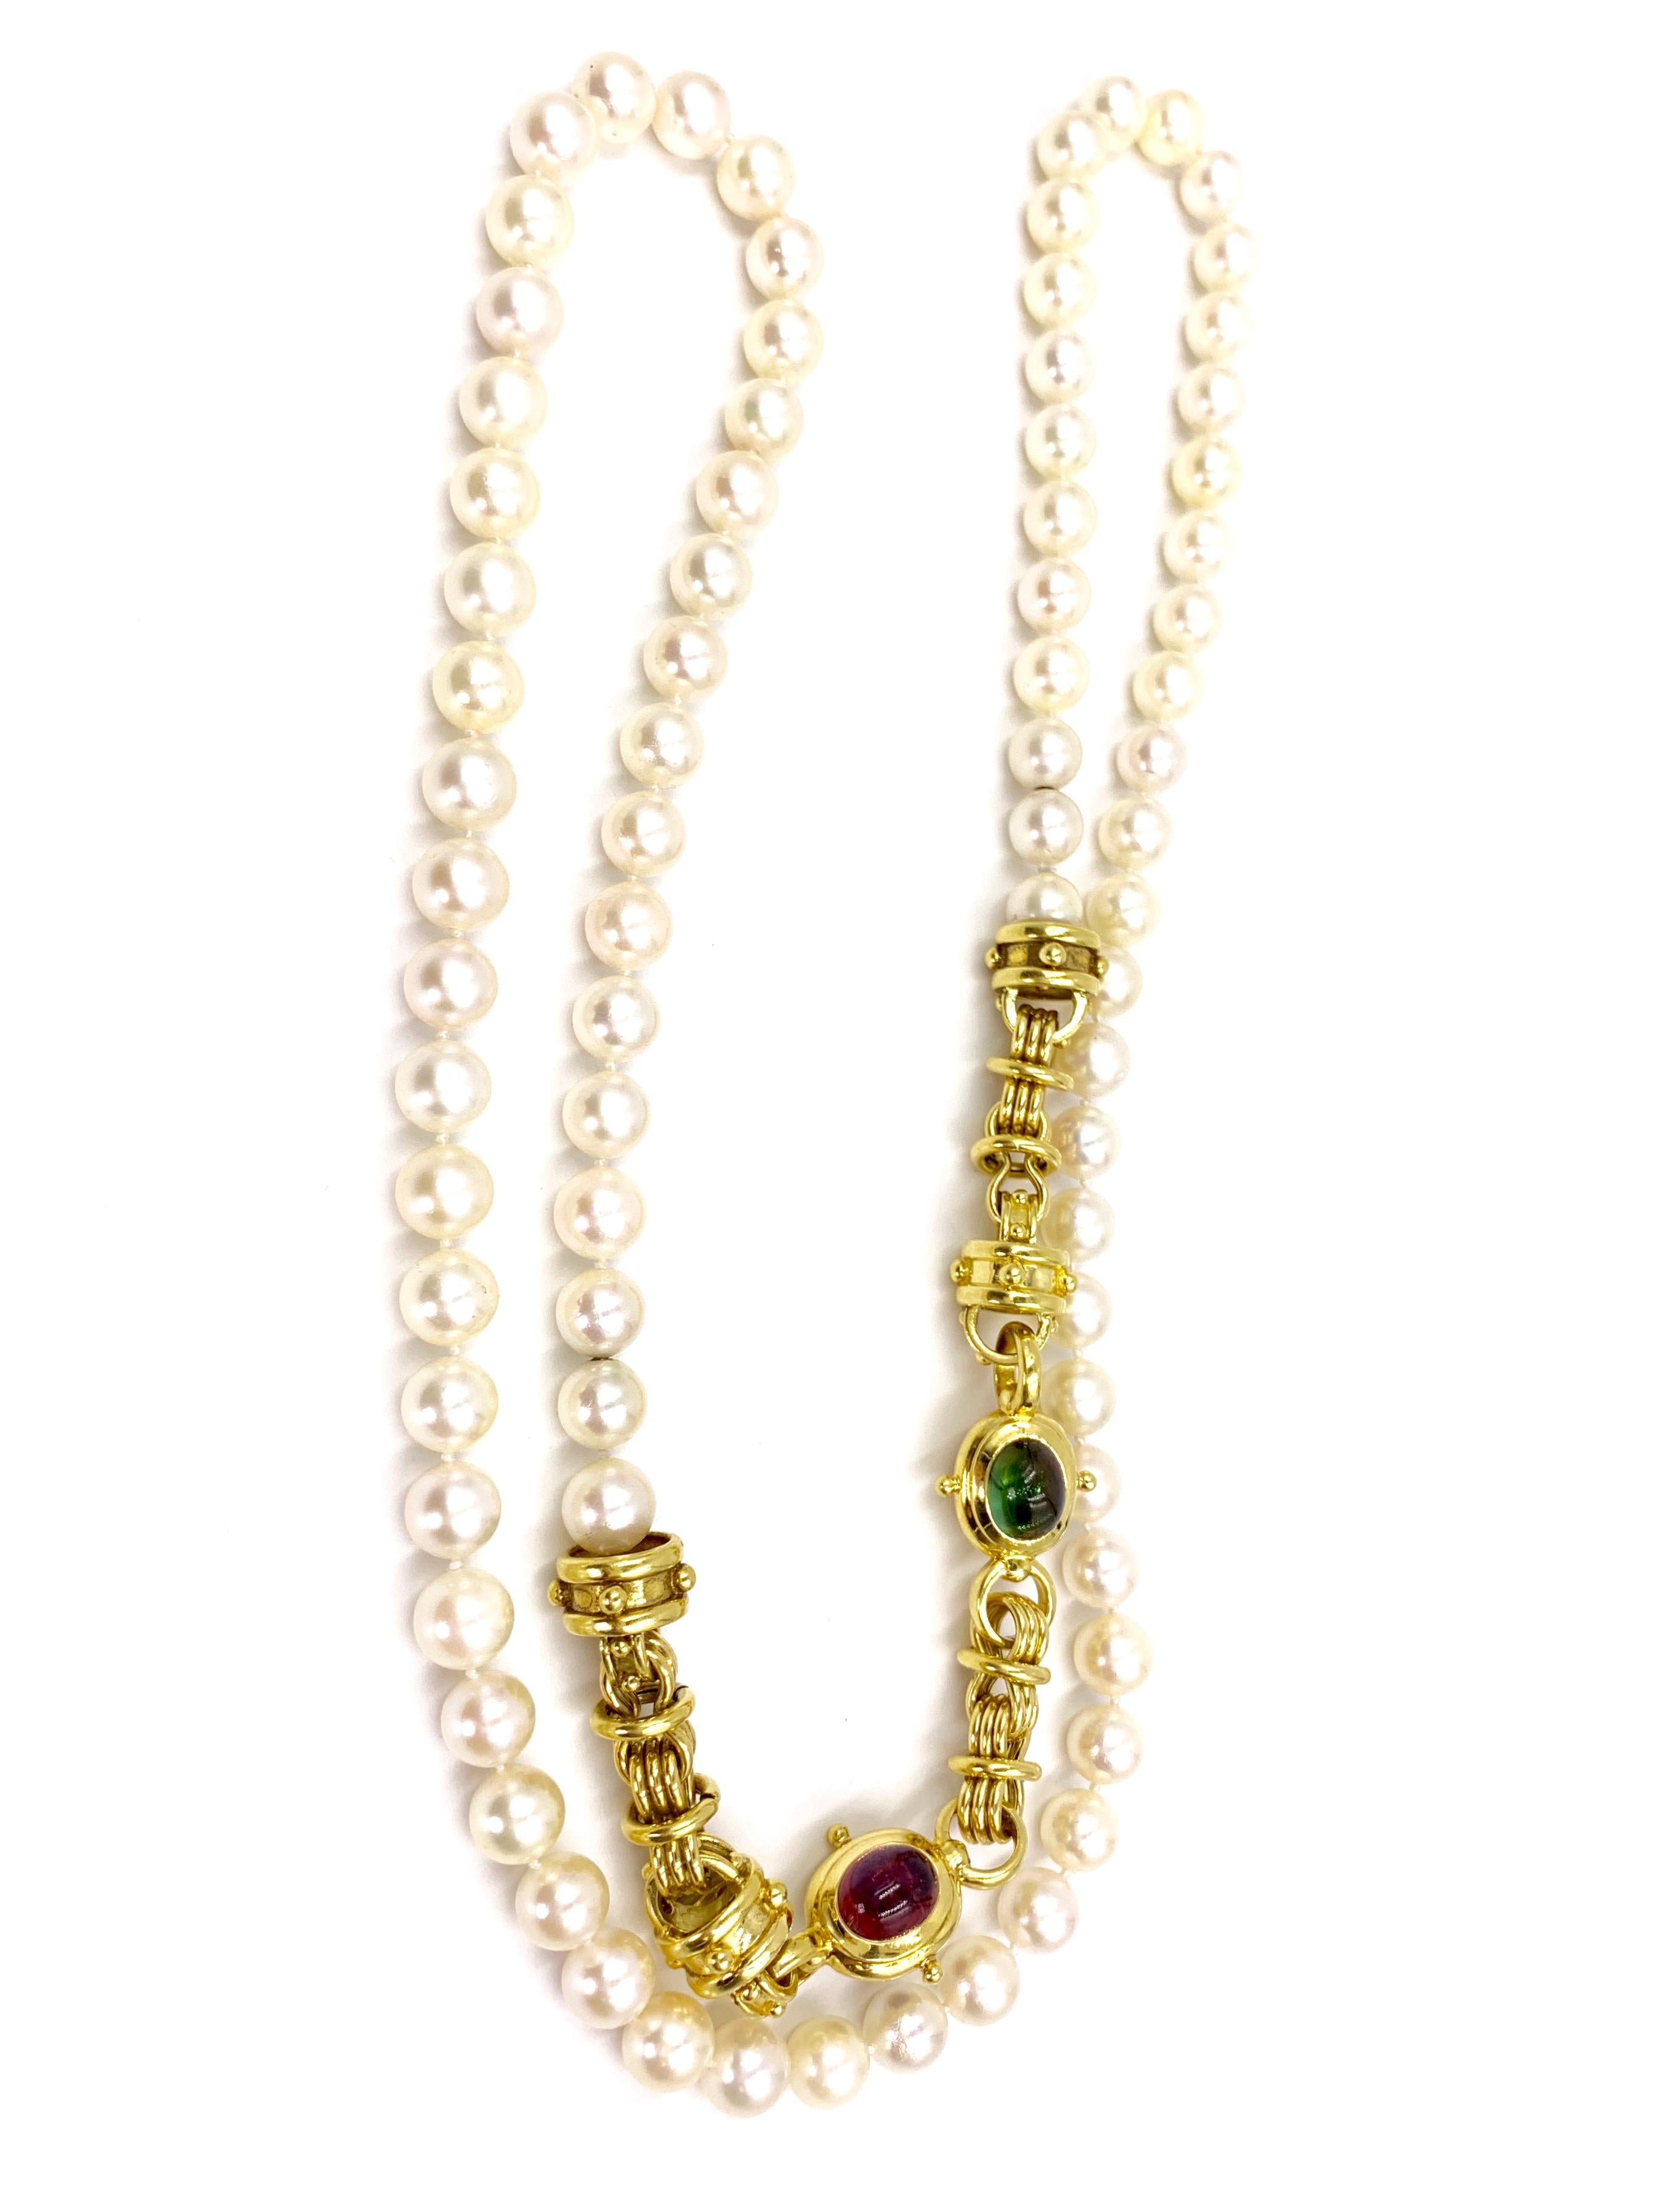 Women's or Men's Long Cultured Pearl Necklace with Detachable 18 Karat Gemstone Bracelet